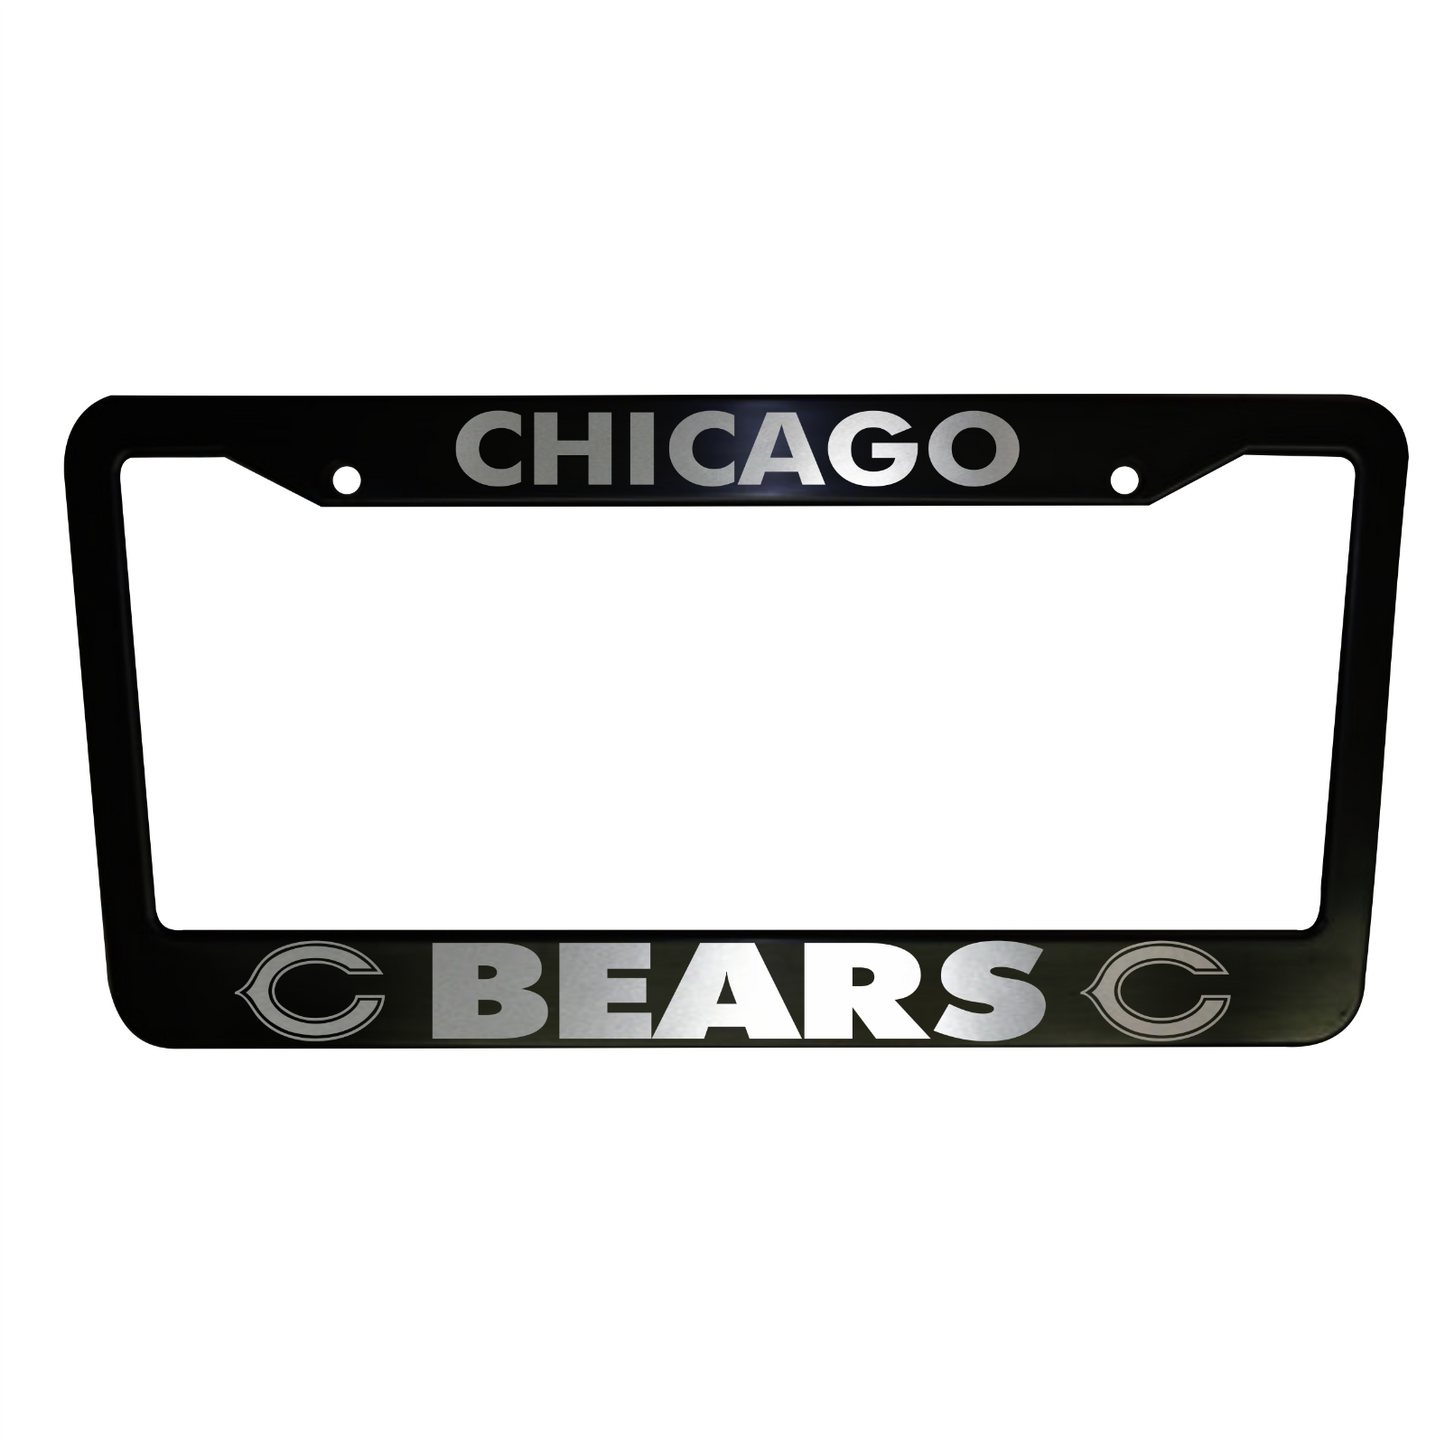 Set of 2 Chicago Bears Black Plastic or Aluminum License Plate Frames Truck Car Van Decor Accessories Auto Parts